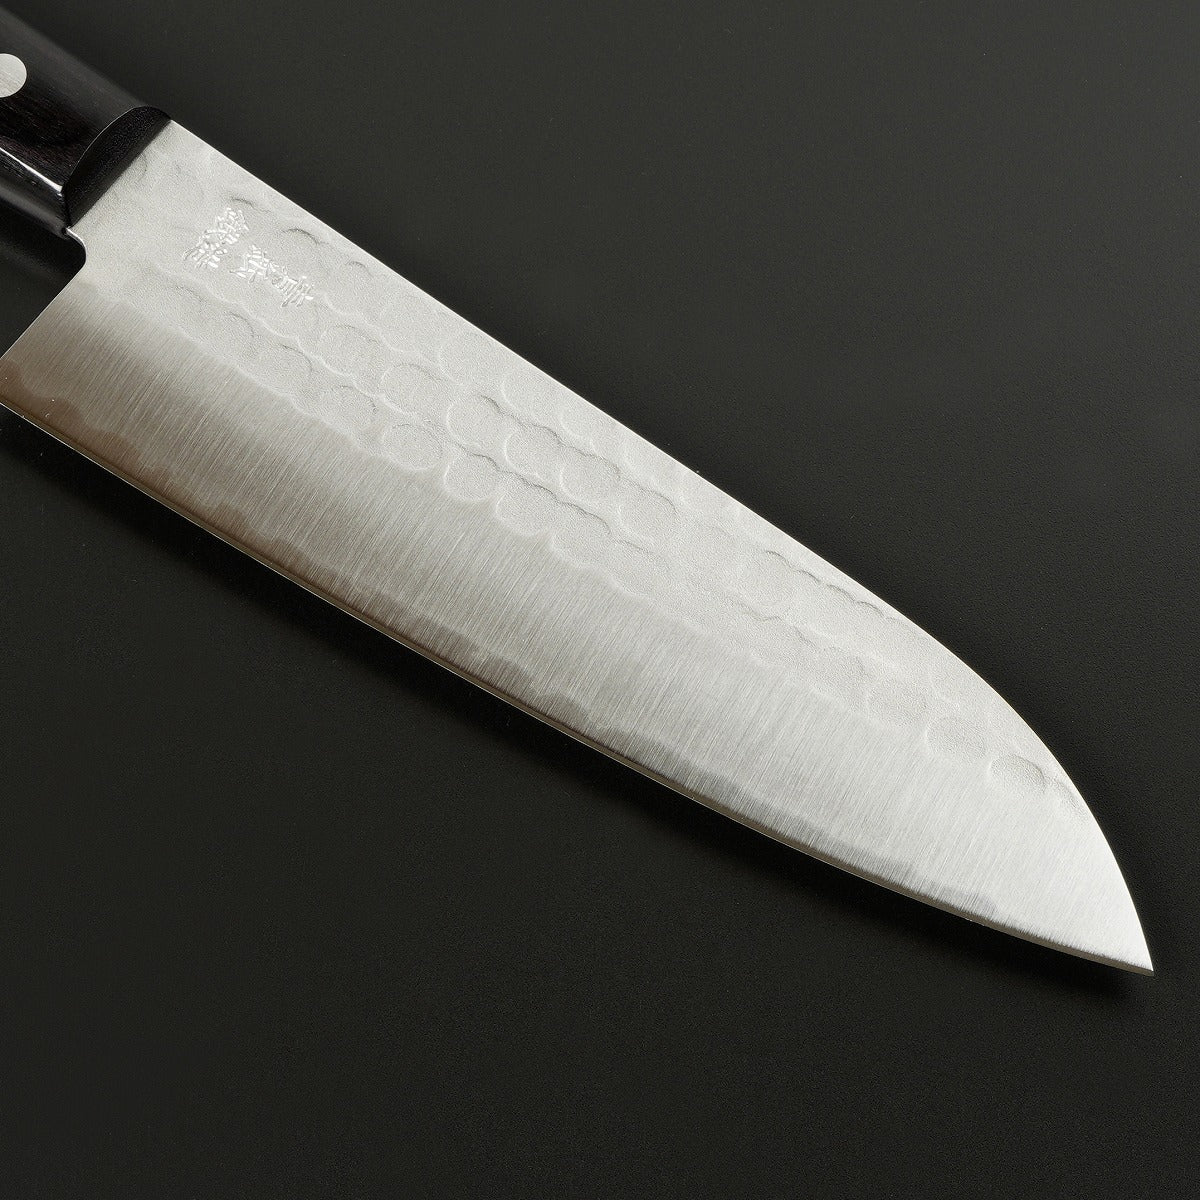 HONMAMON Santoku (Multi-Purpose Knife) Aogami Steel, Satin Finish Surface, 170mm